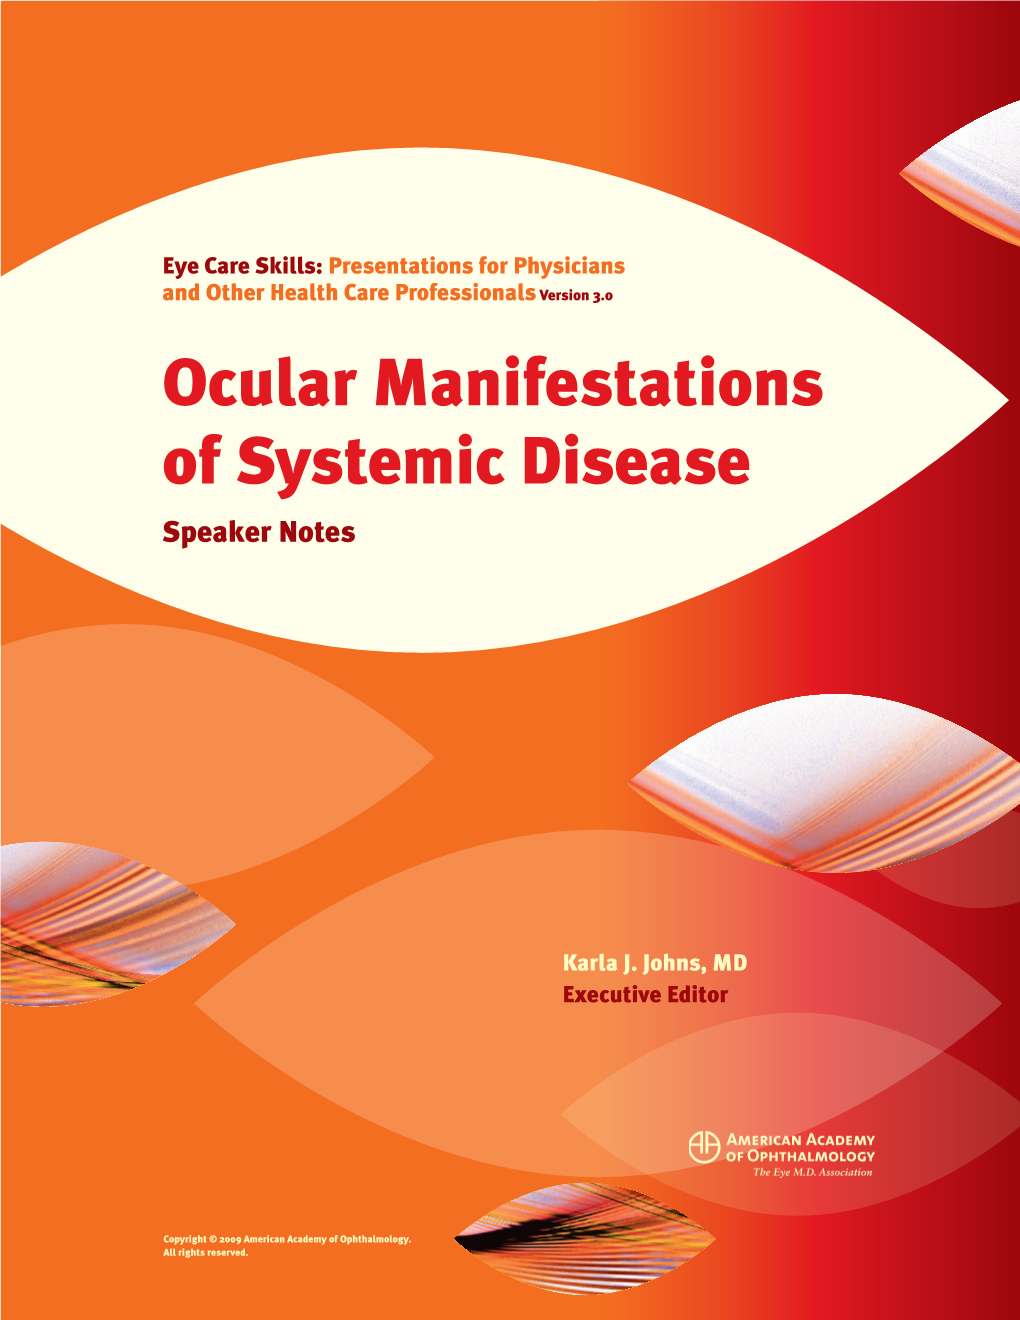 Ocular Manifestations of Systemic Disease Speaker Notes